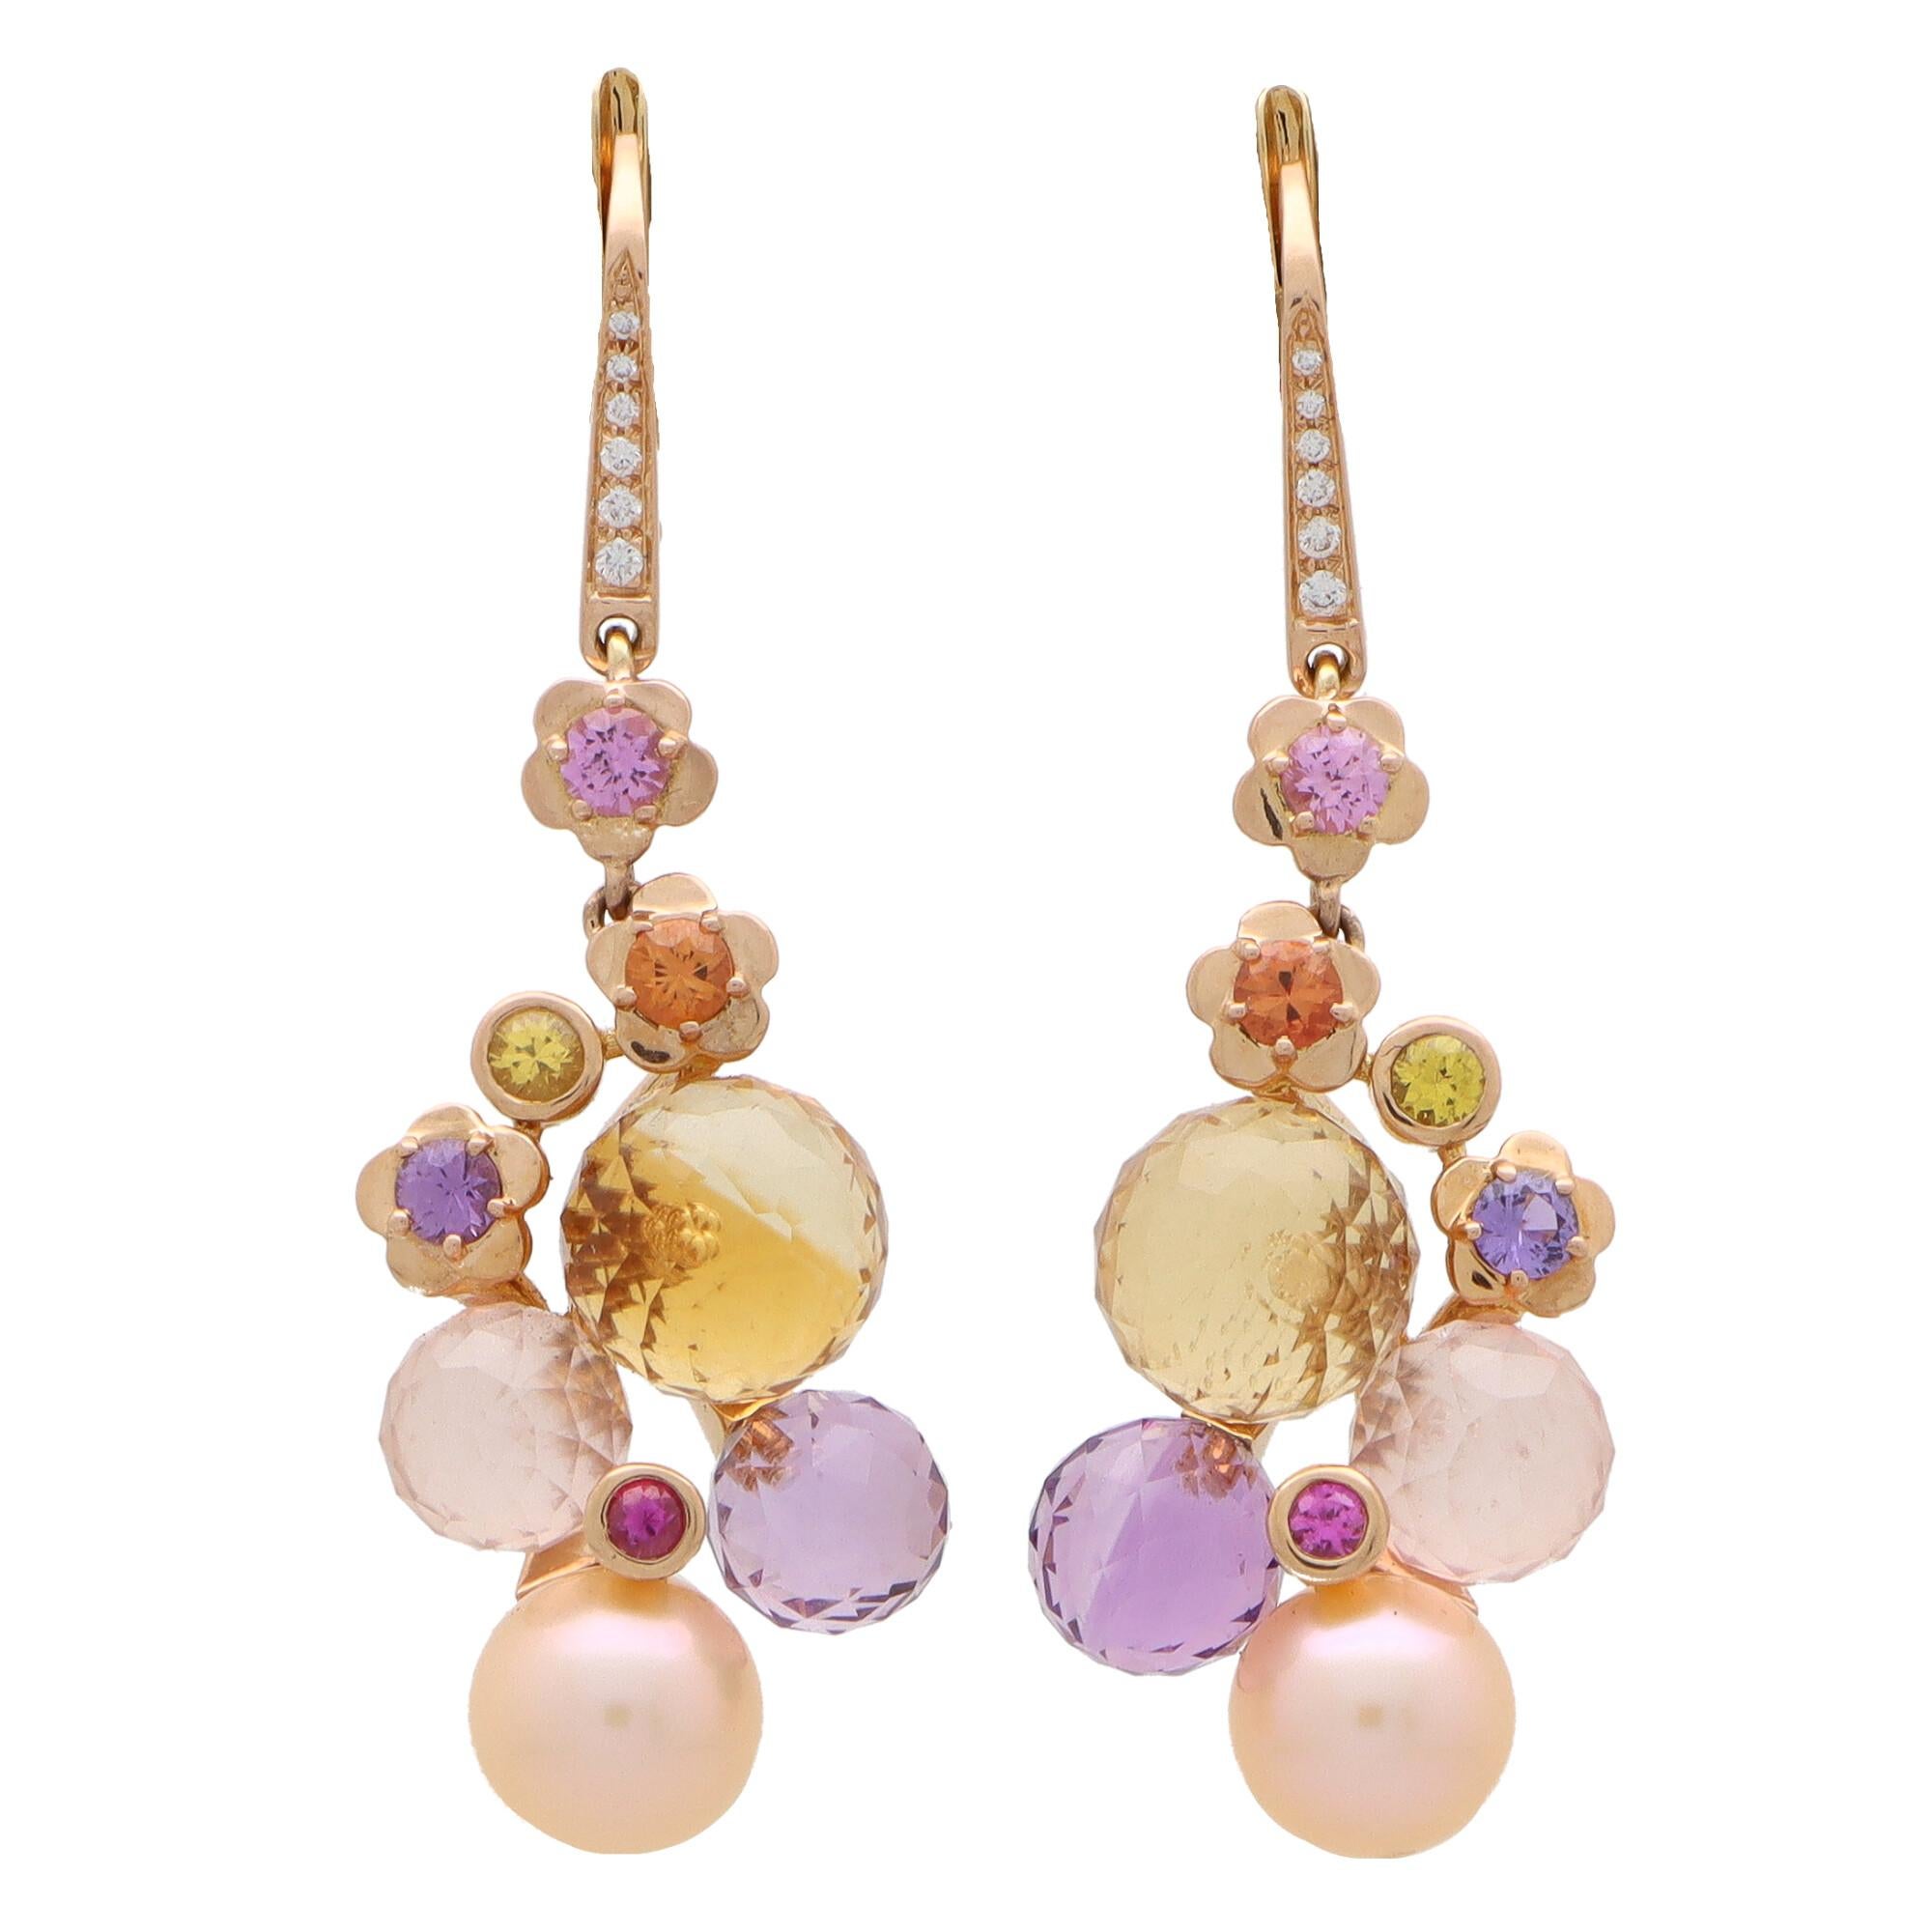 Vintage Chanel 'Mademoiselle' Pearl and Multi Gem Drop Earrings in 18k Rose Gold